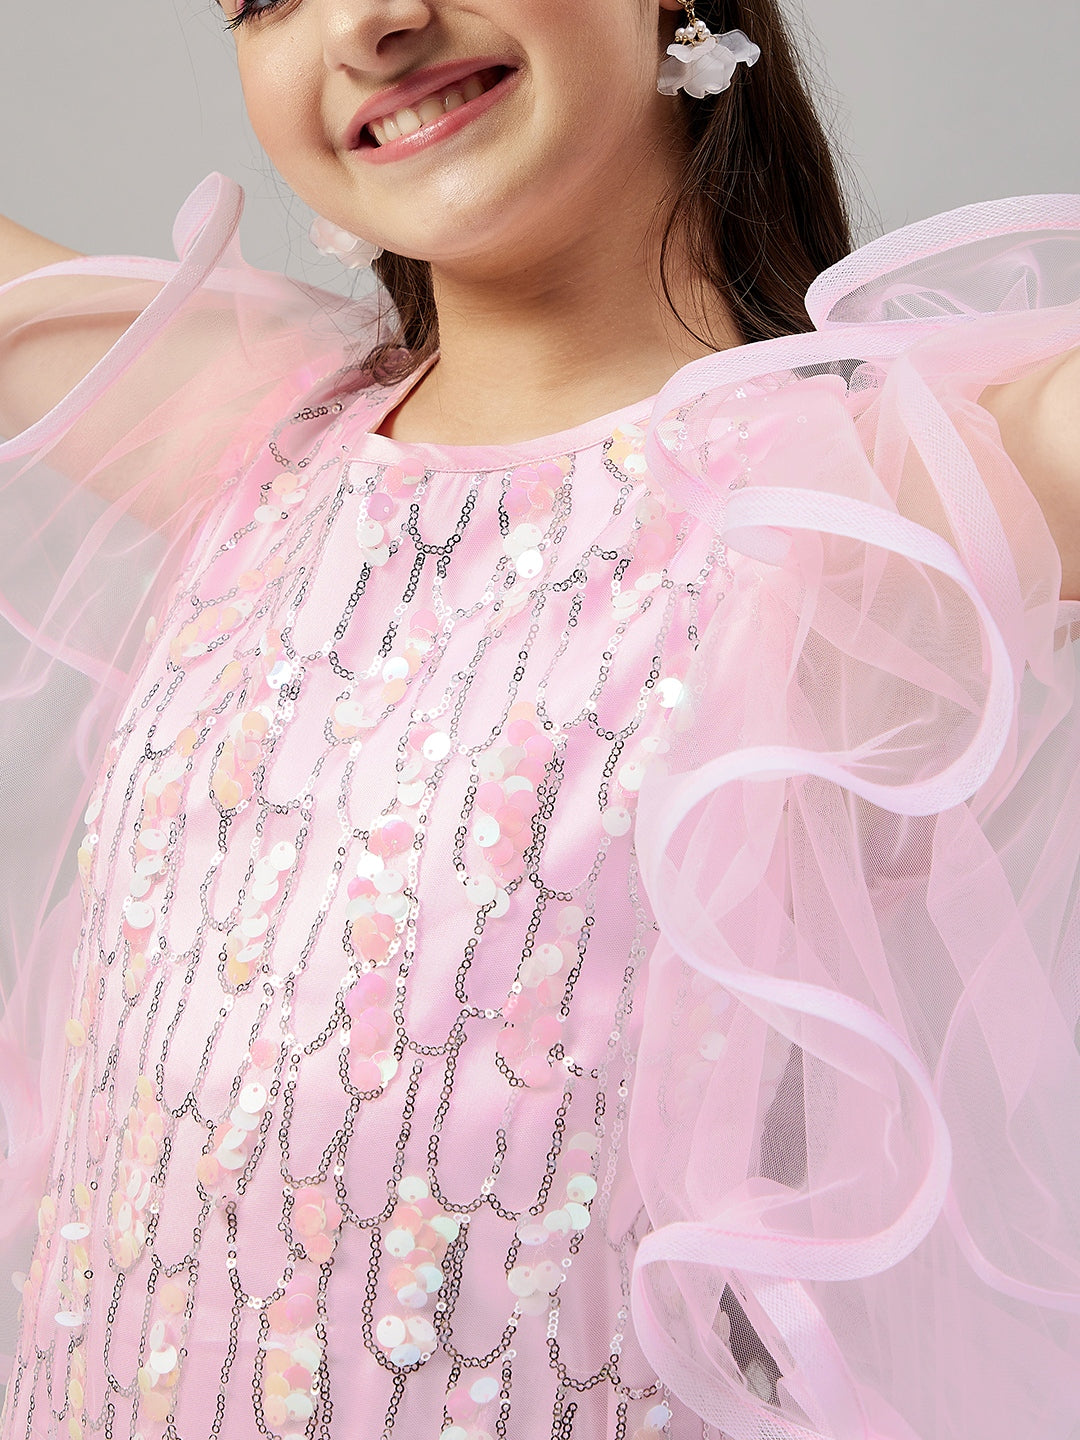 Girl's Embroidery Dress Pink - StyloBug KIDS